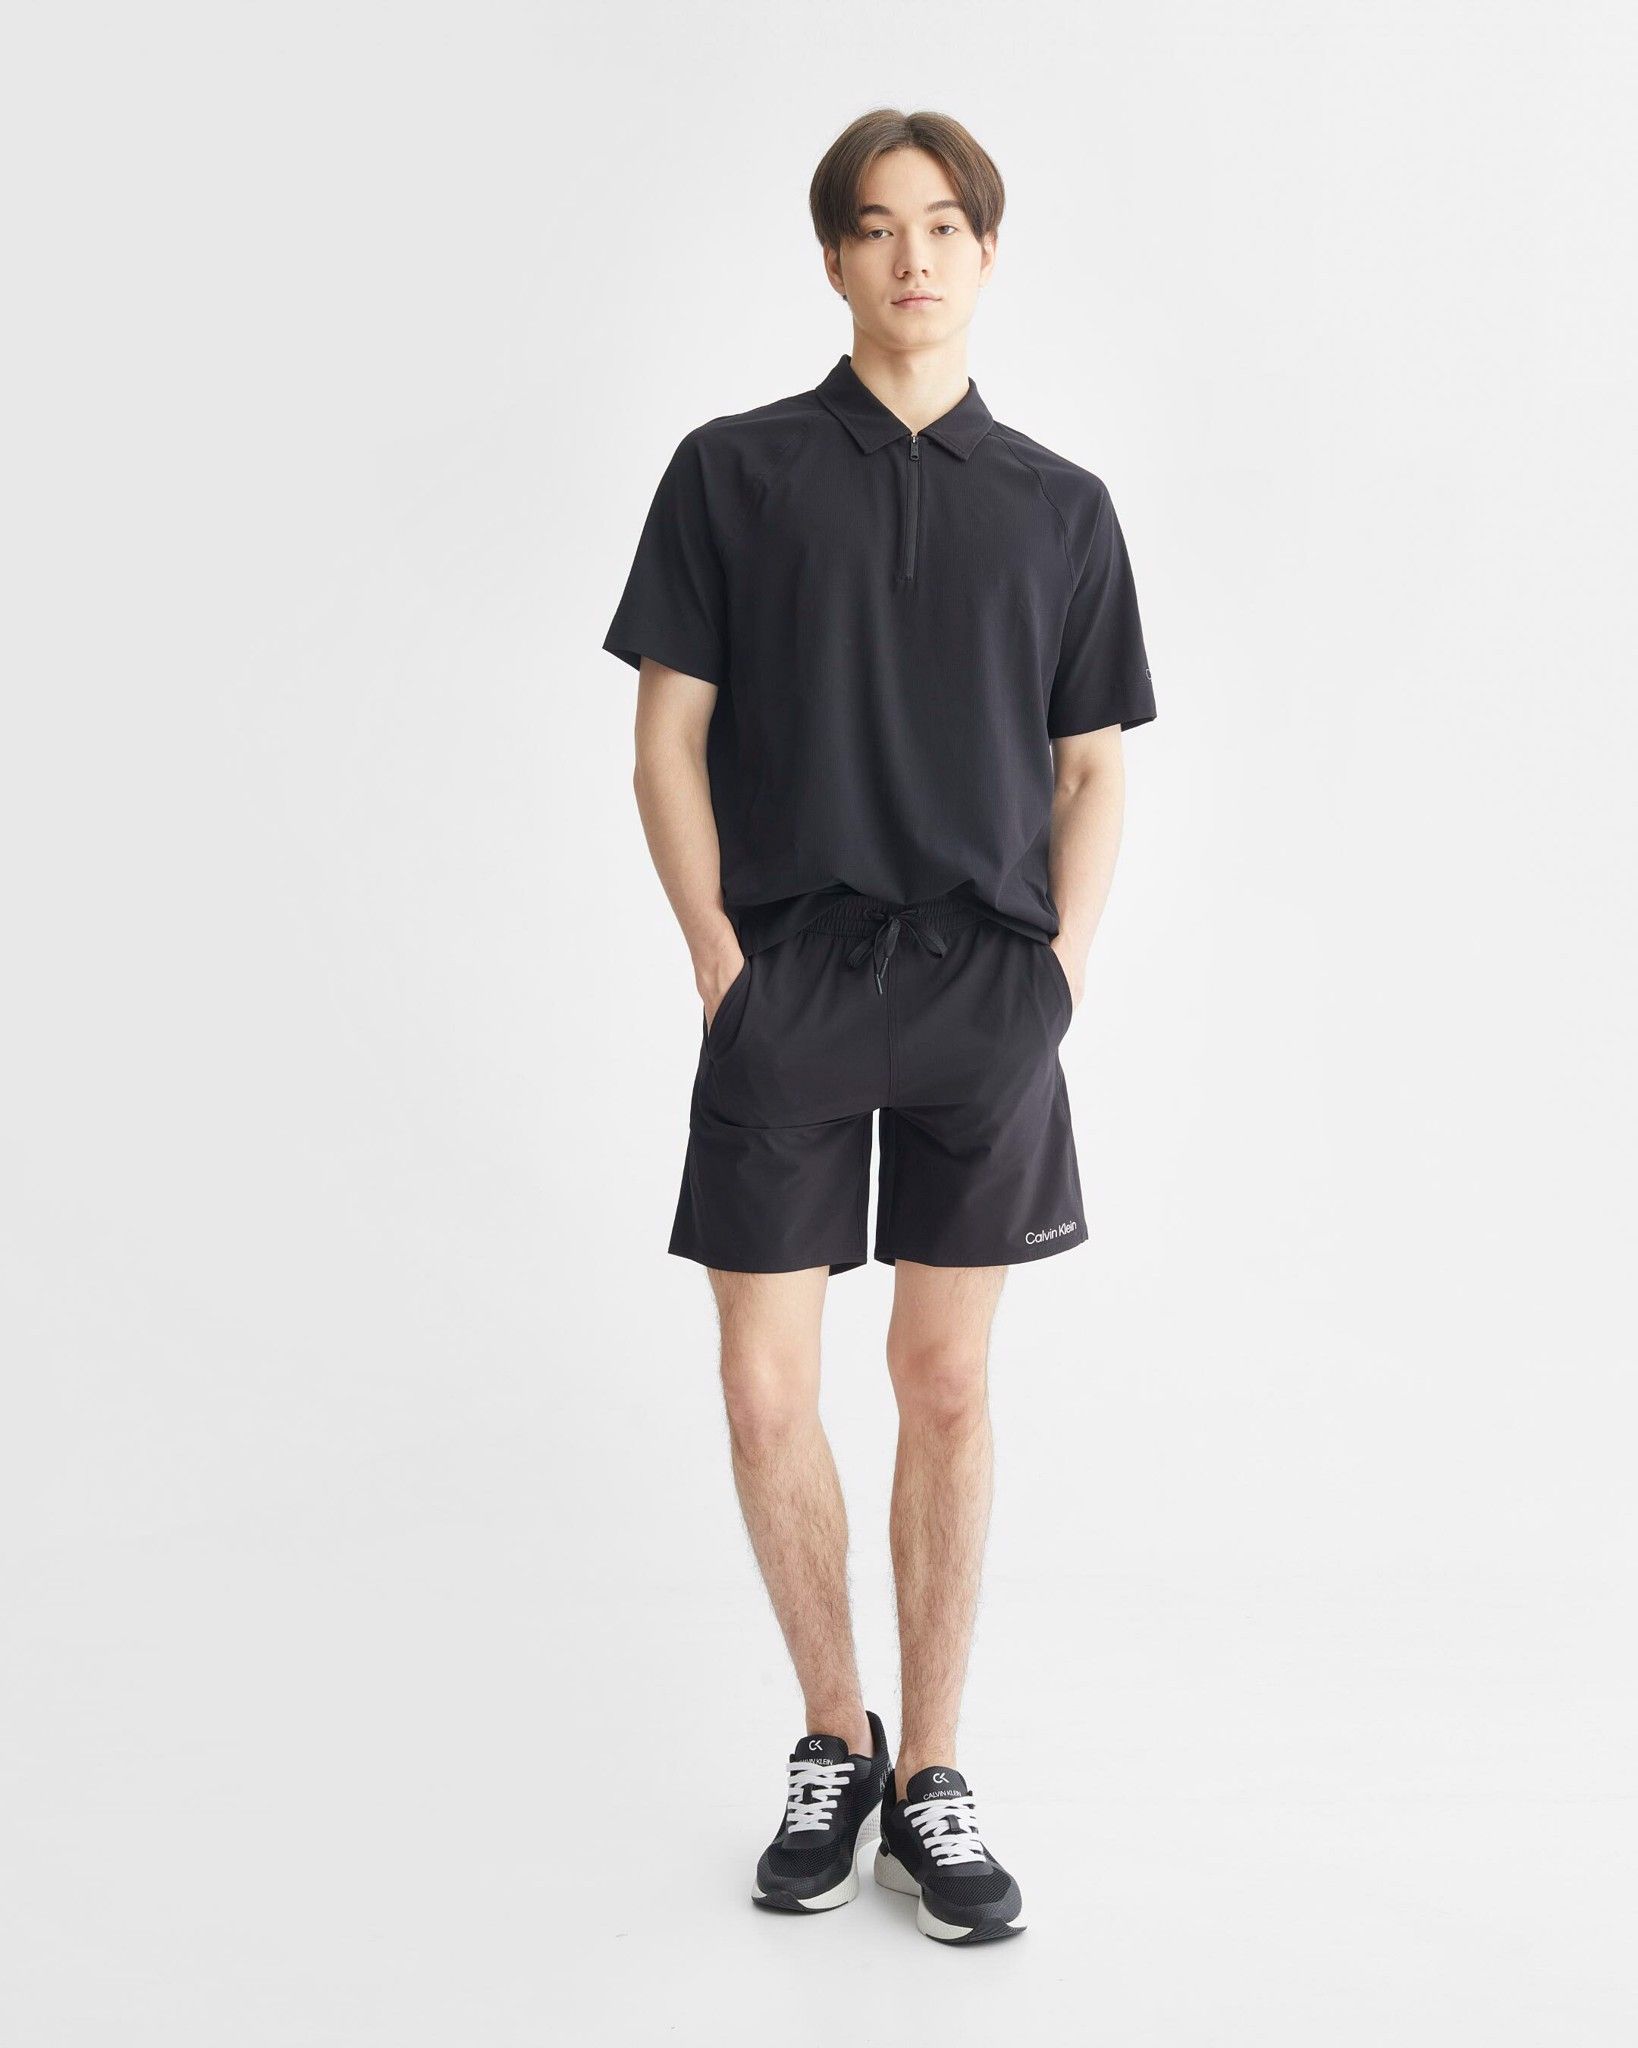 Calvin Klein – Sports Shorts Men Woven Short 4M23-S800 –ULA Vietnam